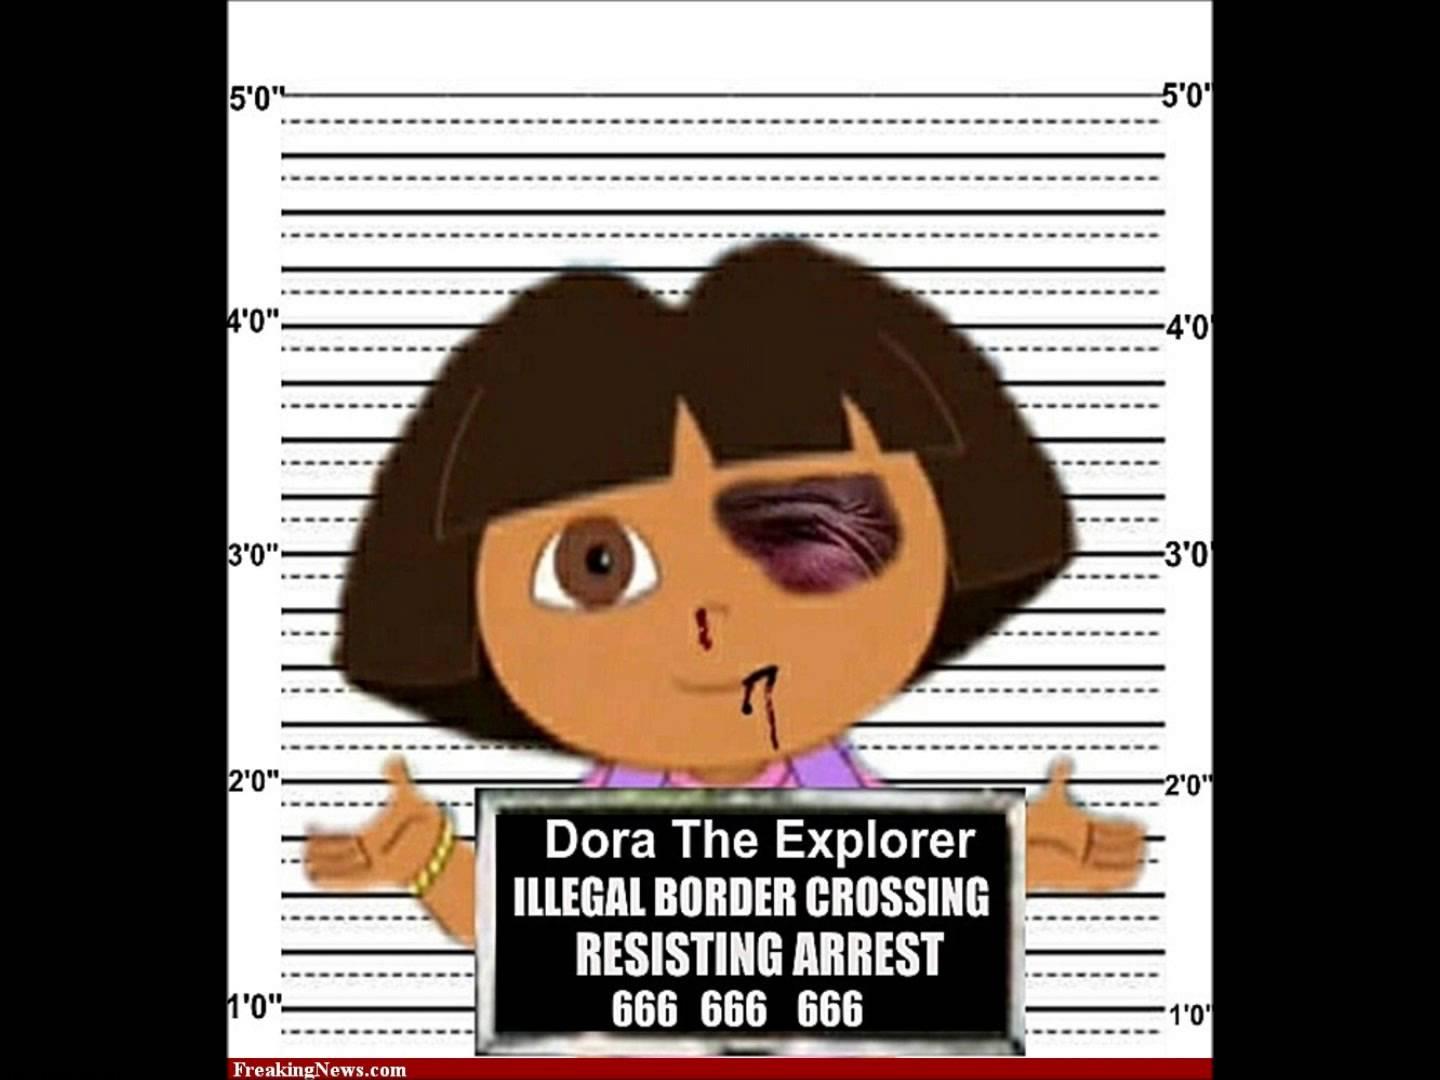 Dora arrested for illegal border crossing